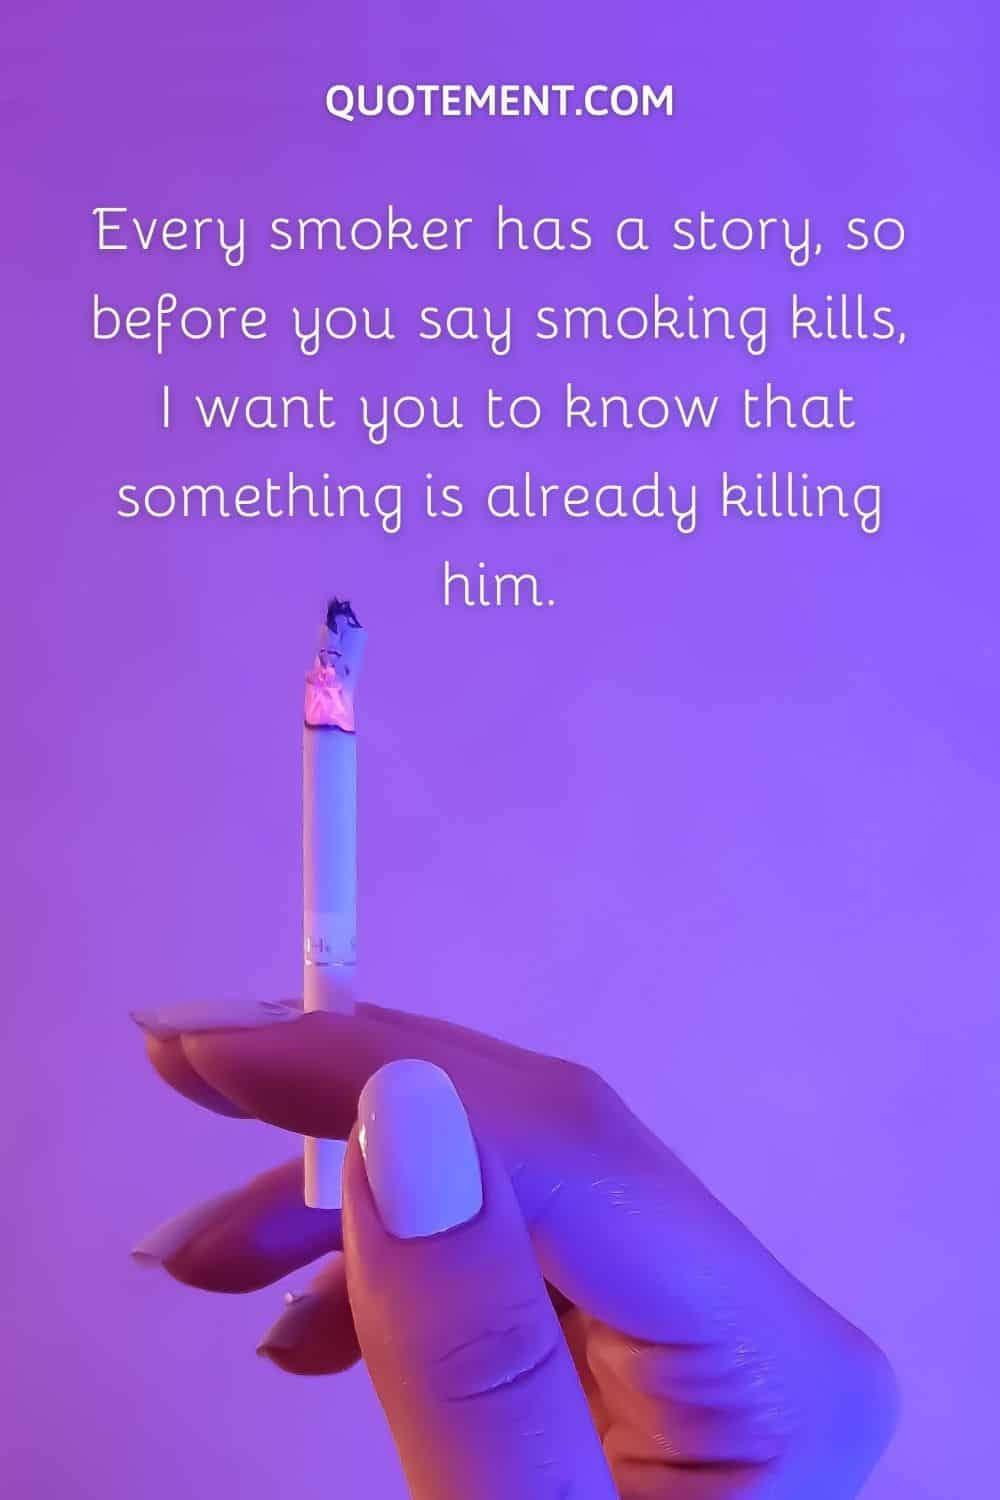 Every smoker has a story